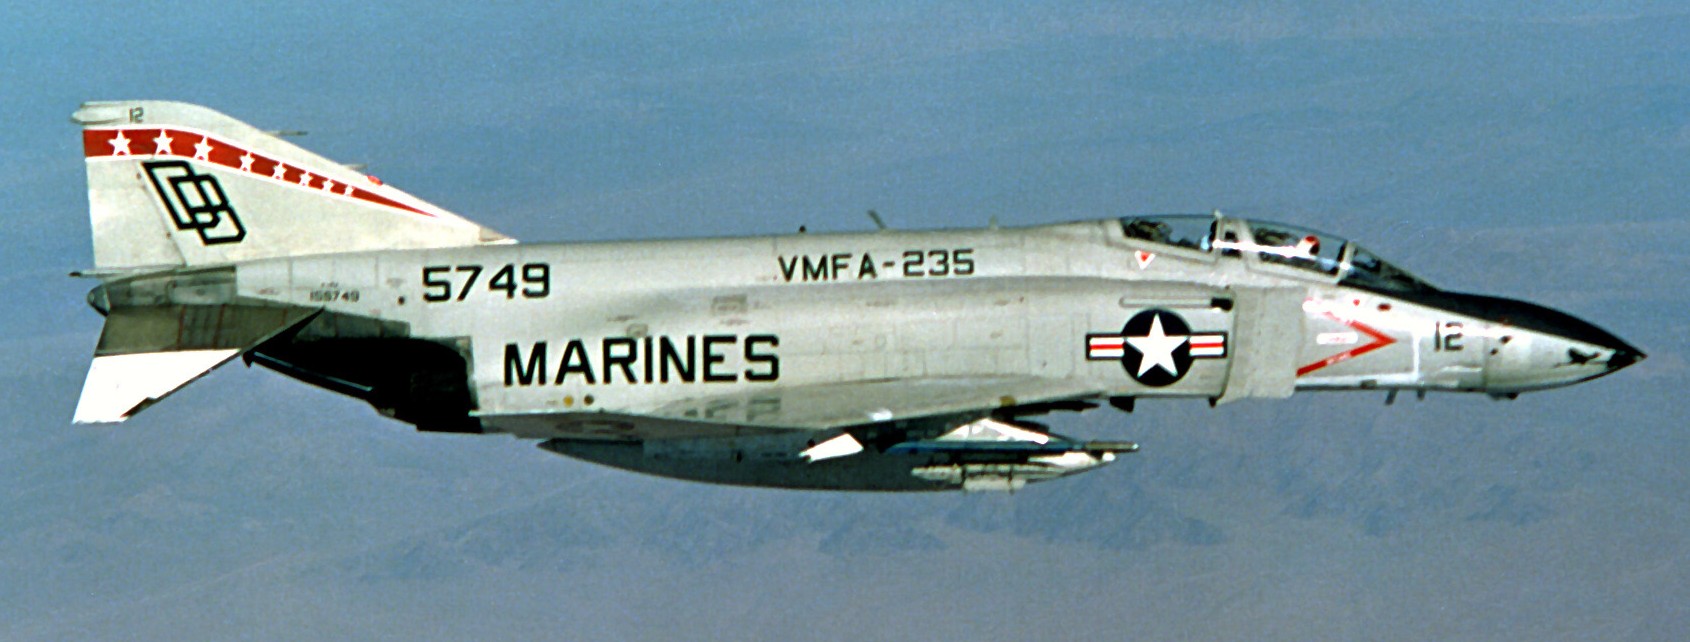 vmfa-235 death angels marine fighter attack squadron usmc f-4j phantom ii 05